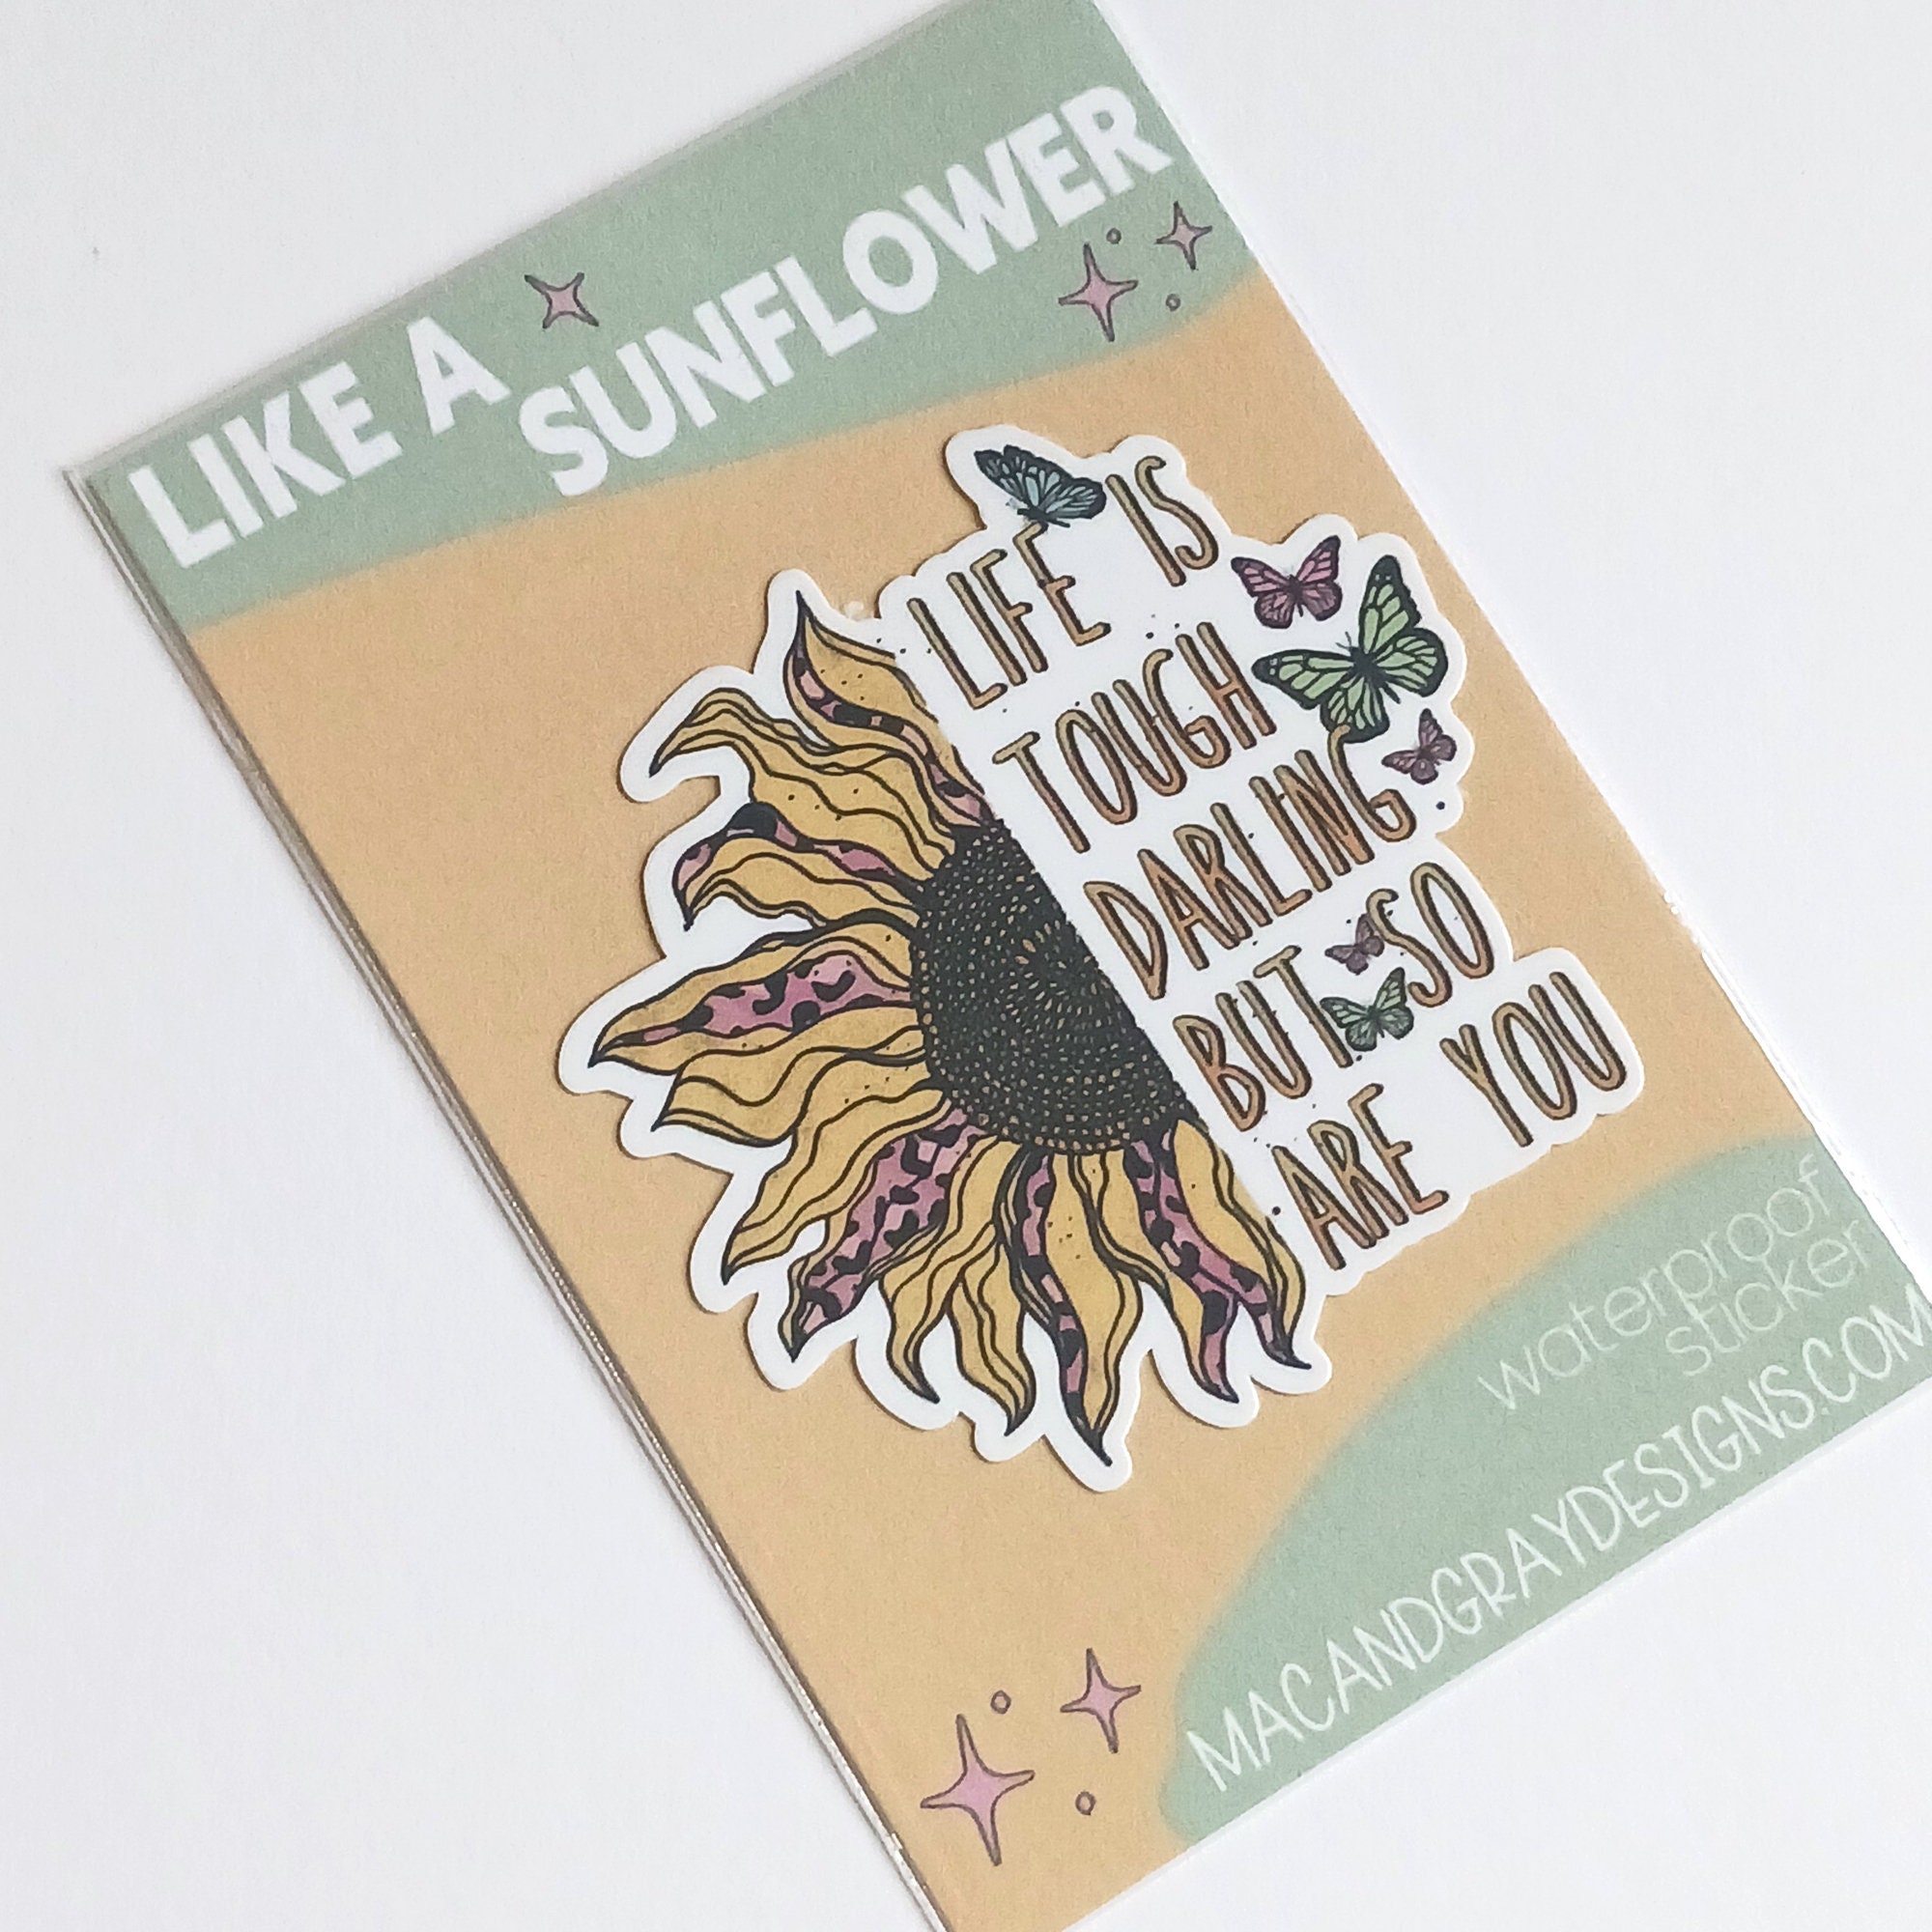 Motivational Stickers, Sunflower Stickers, DIY stickers - Payhip